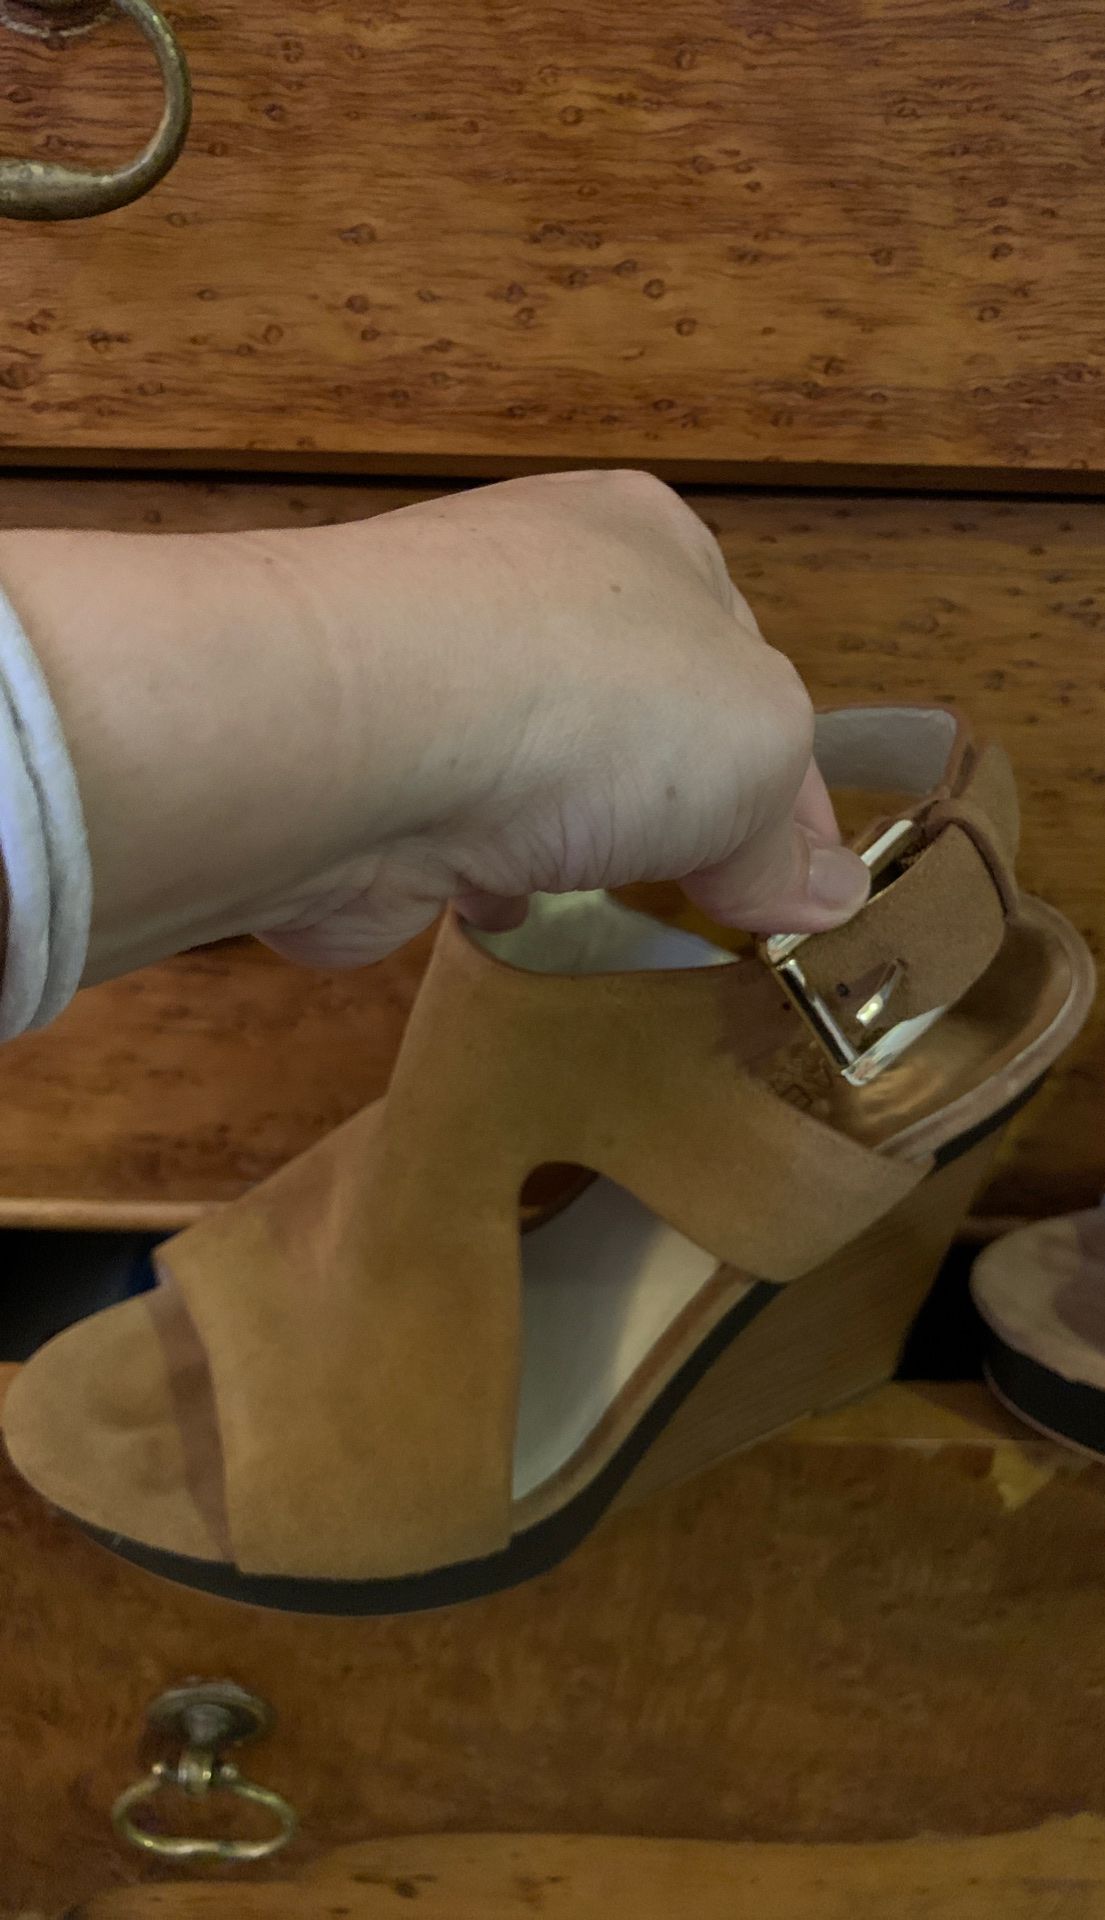 Michael Kors sandals 7.5